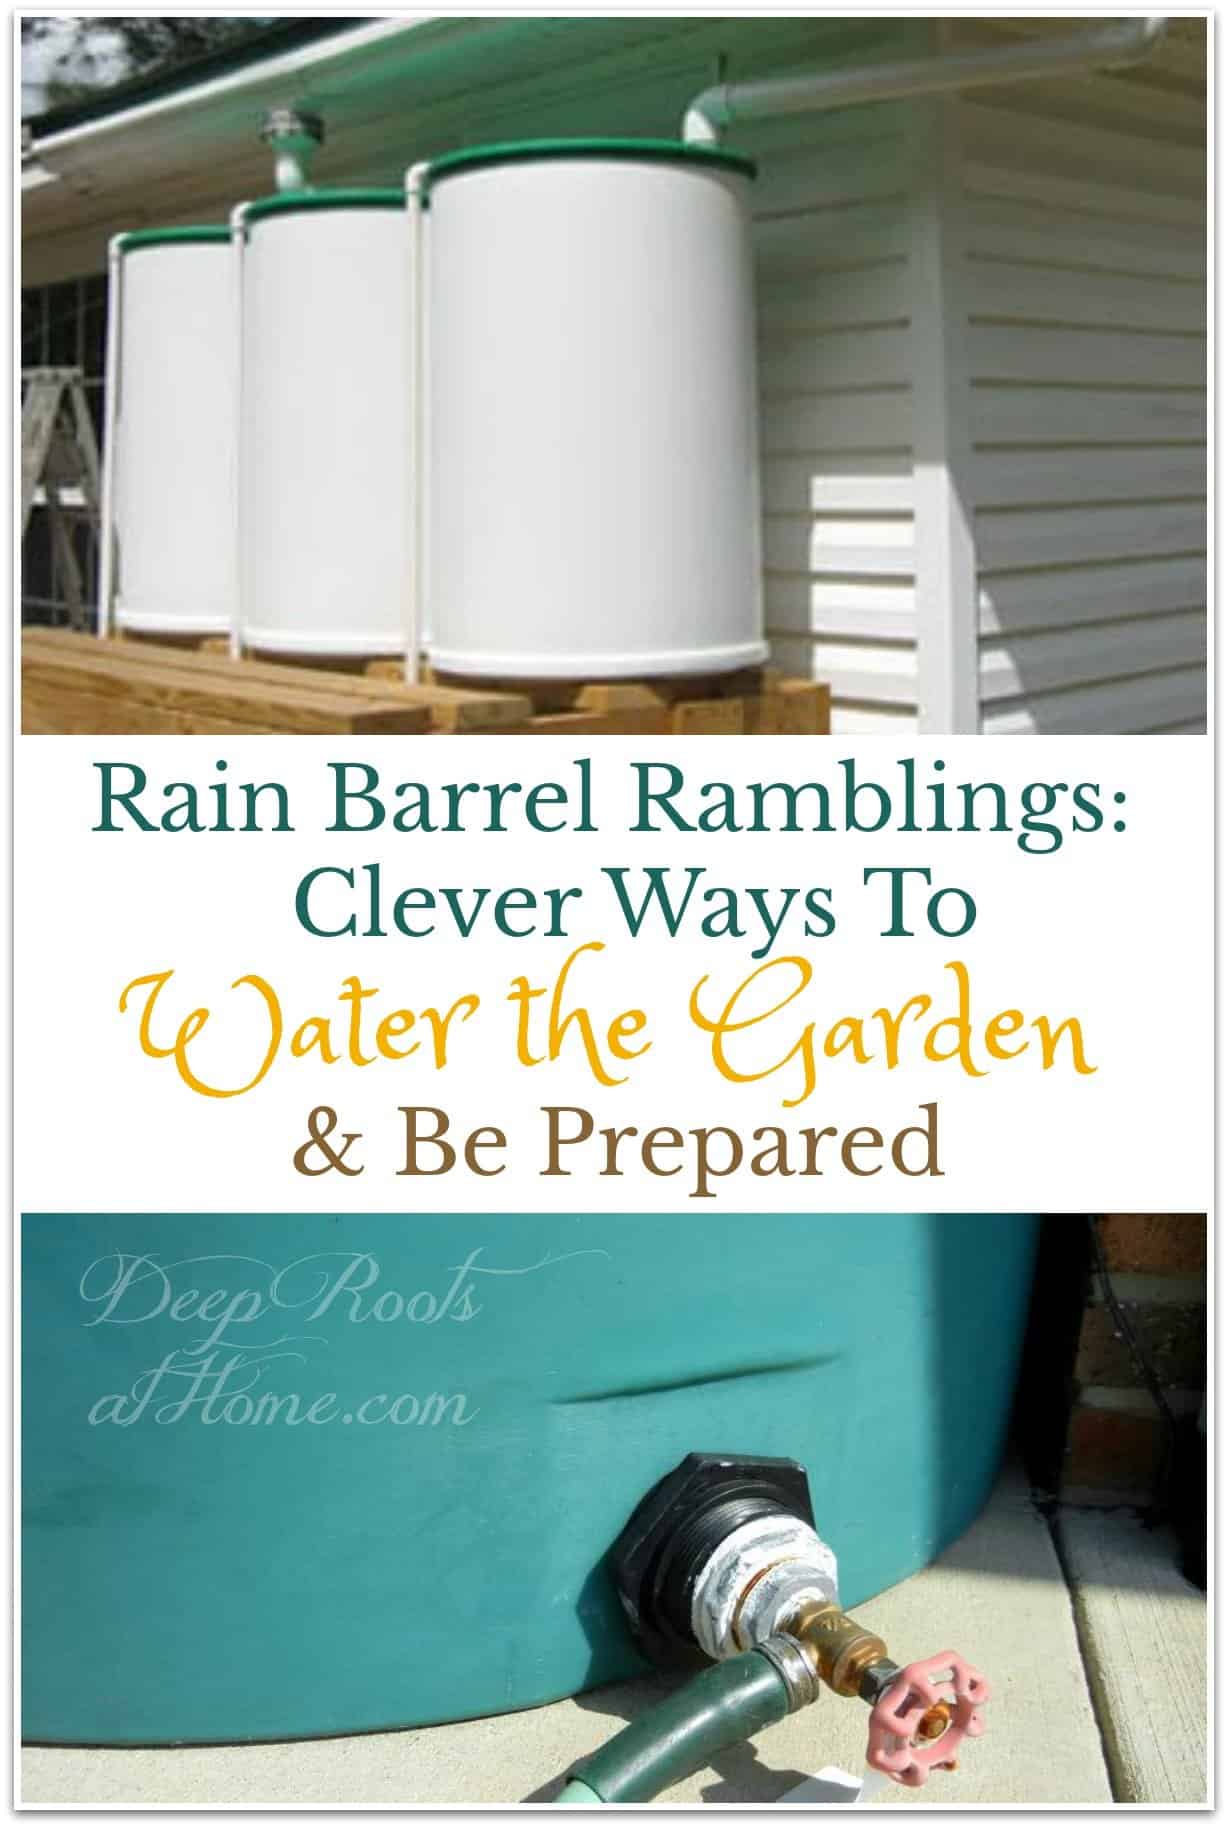 Rain Barrel Ramblings: Clever Ways To Water the Garden & Be Prepared. rain collection barrels